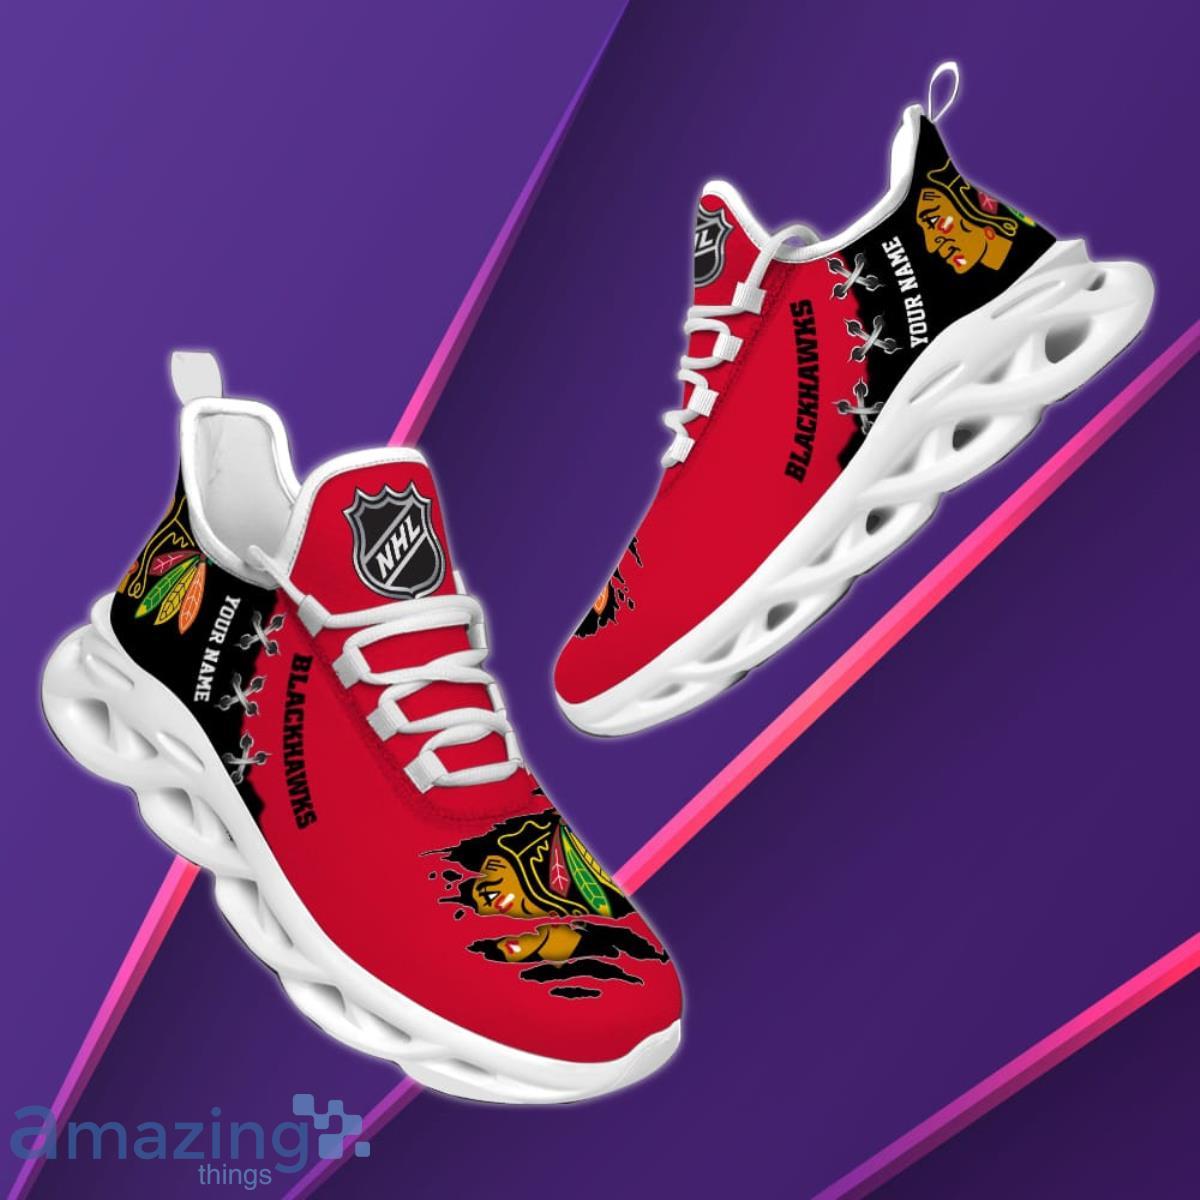 Chicago Blackhawks Custom Name NHL New Luxury Max Soul Shoes Gift